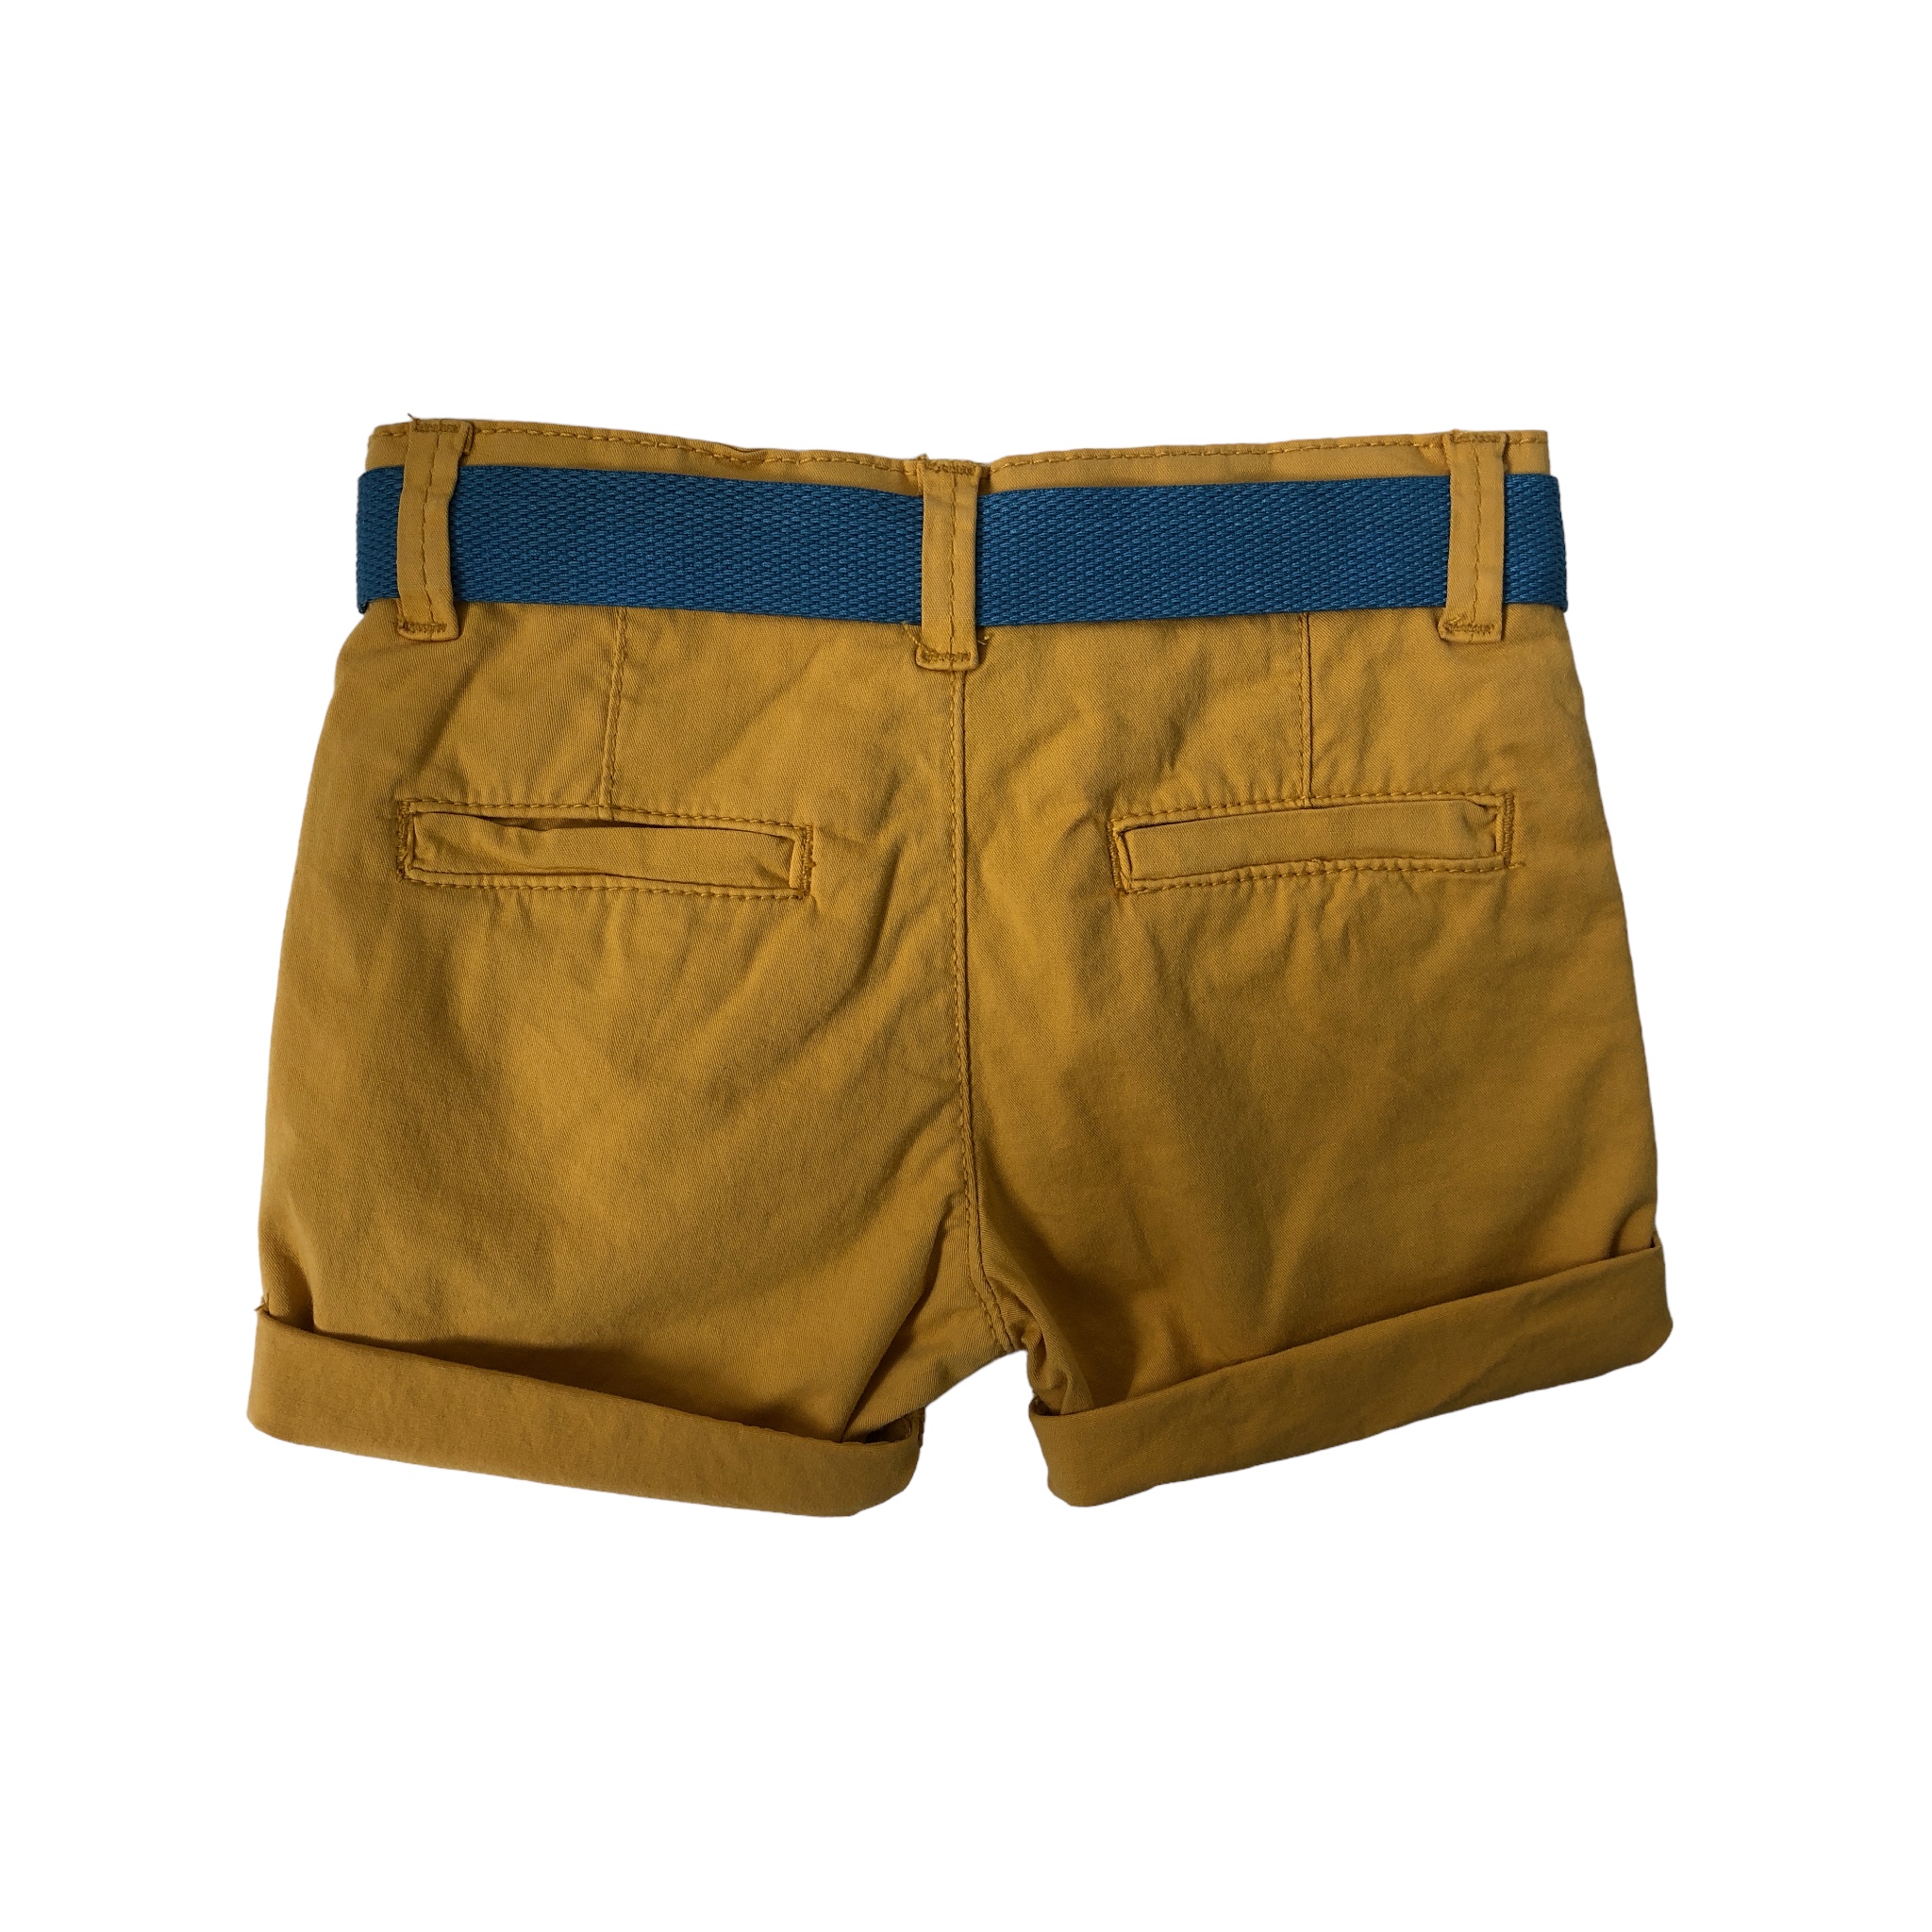 Pantalón corto para Niño en color amarillo con cinturón azul